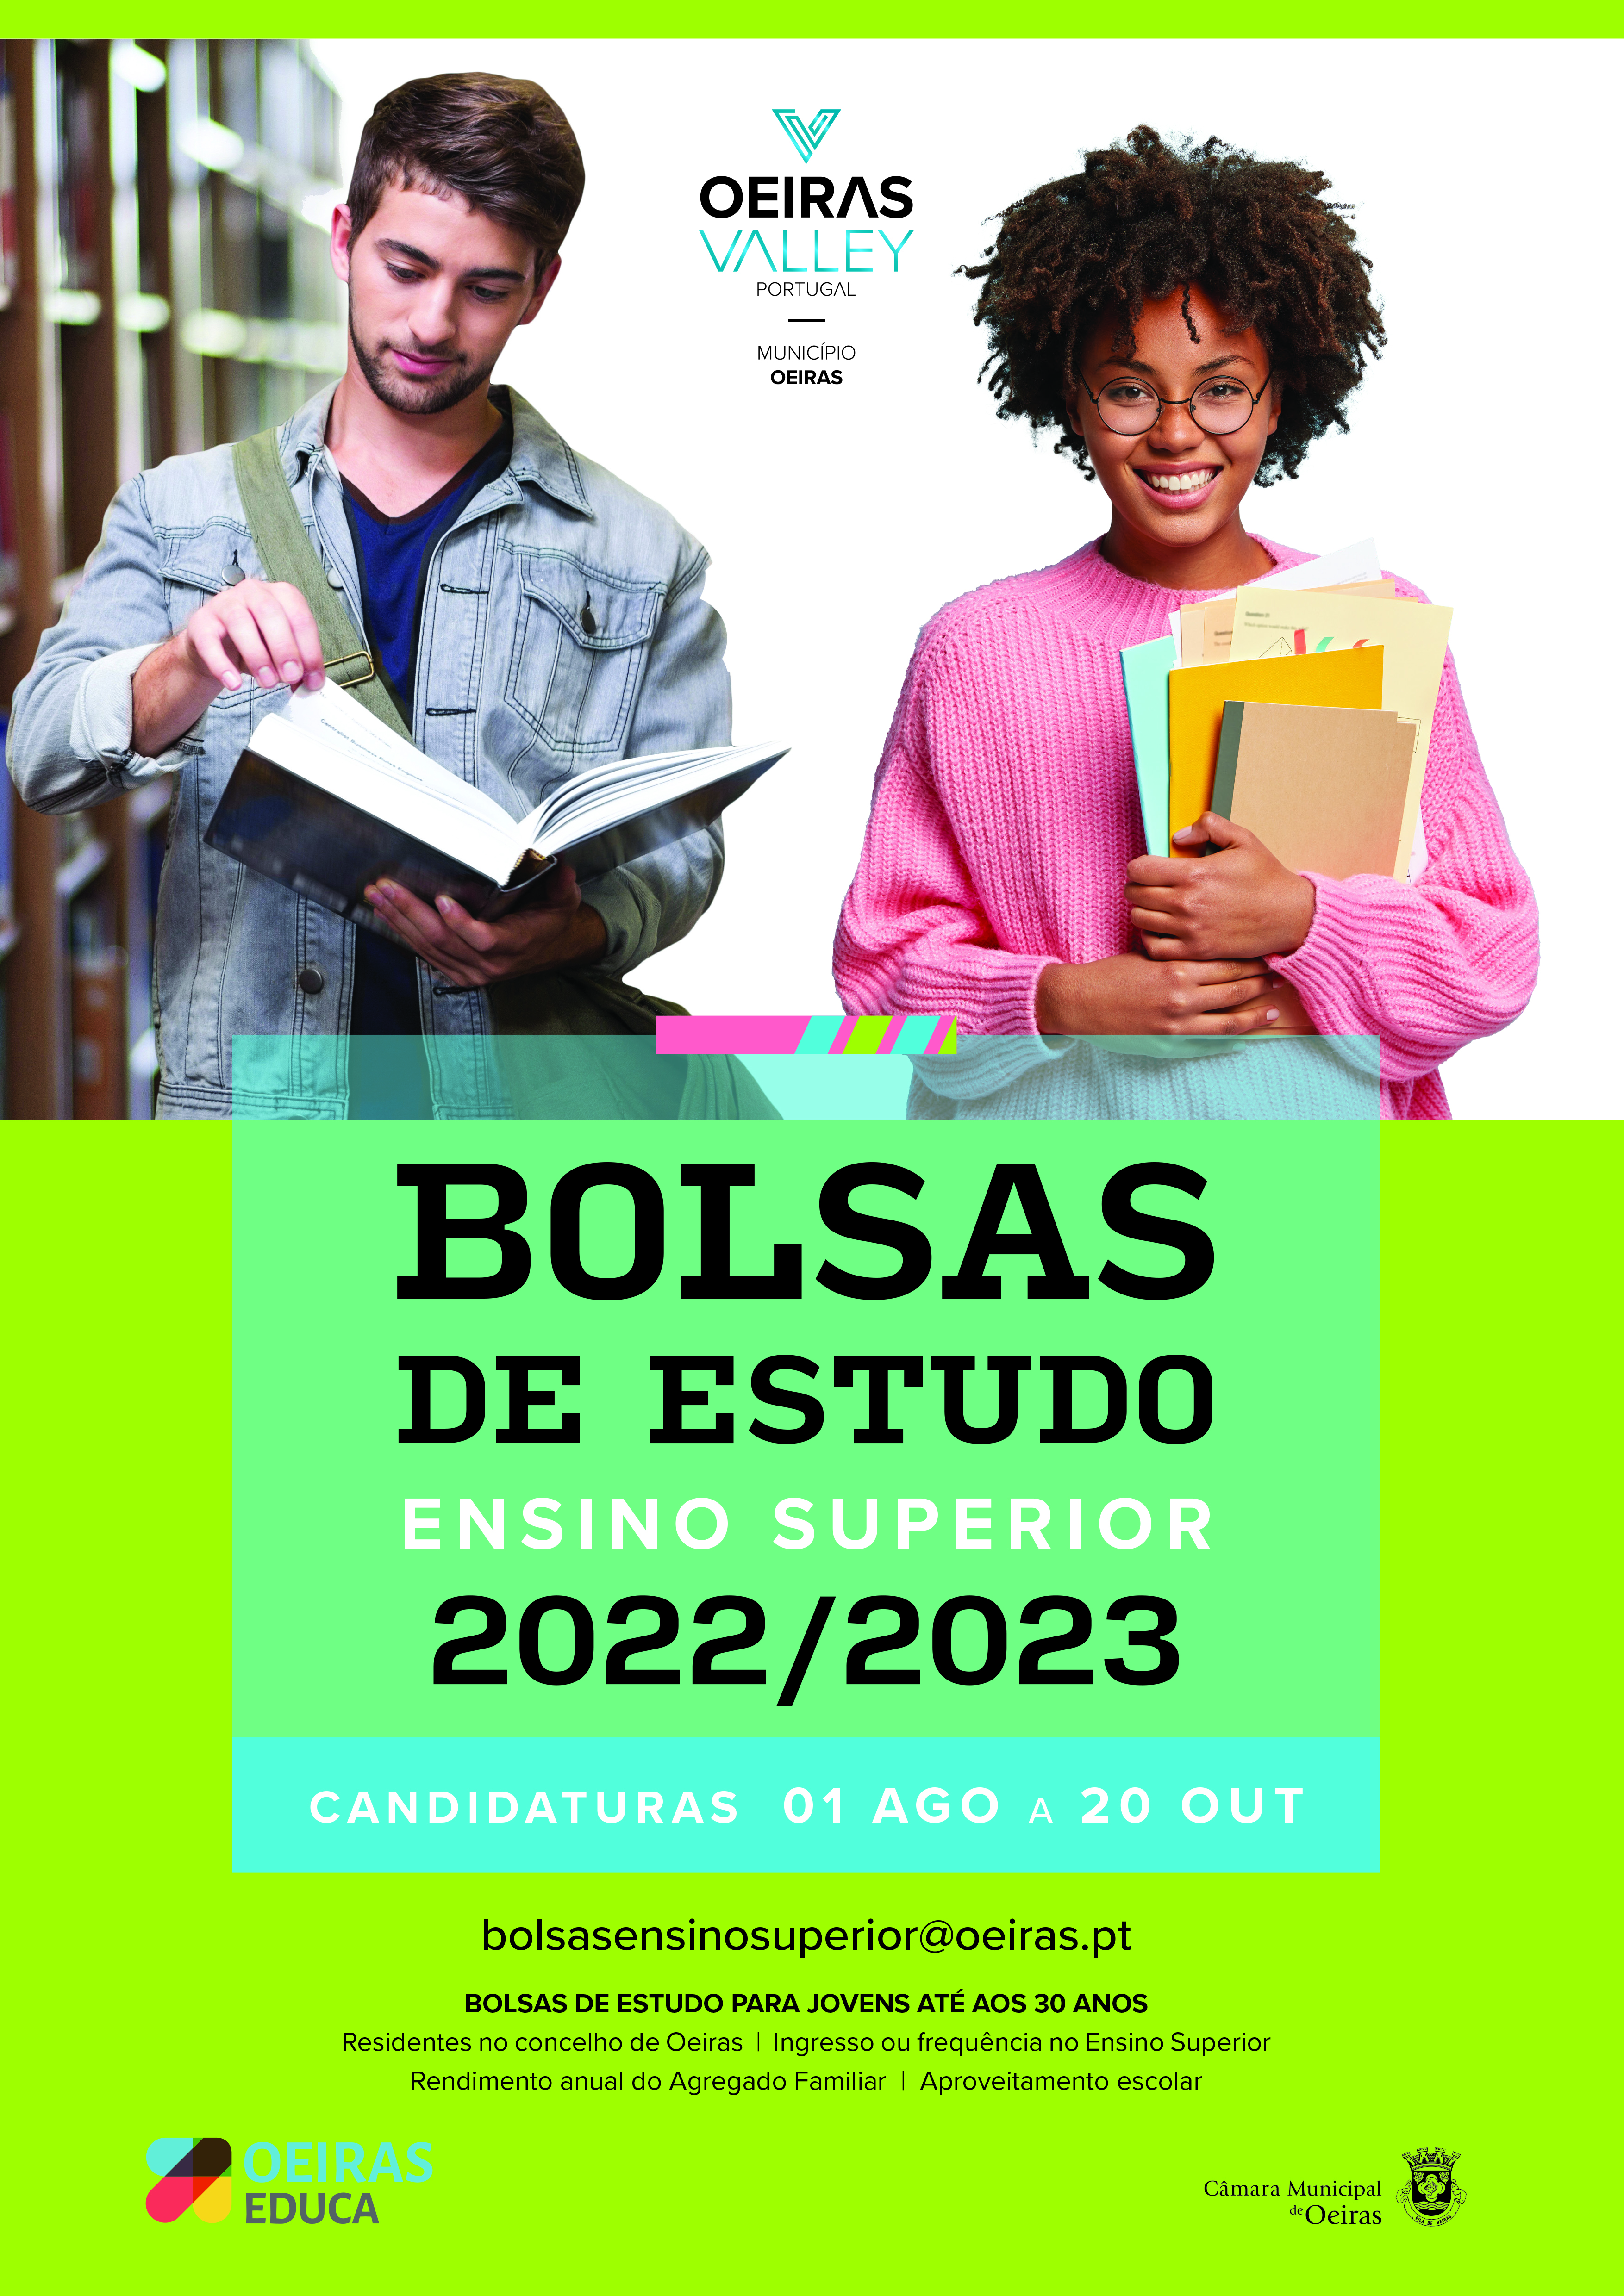 Bolsas de Estudo 2022-23 | Oeiras apoia acesso universal ao Ensino Superior